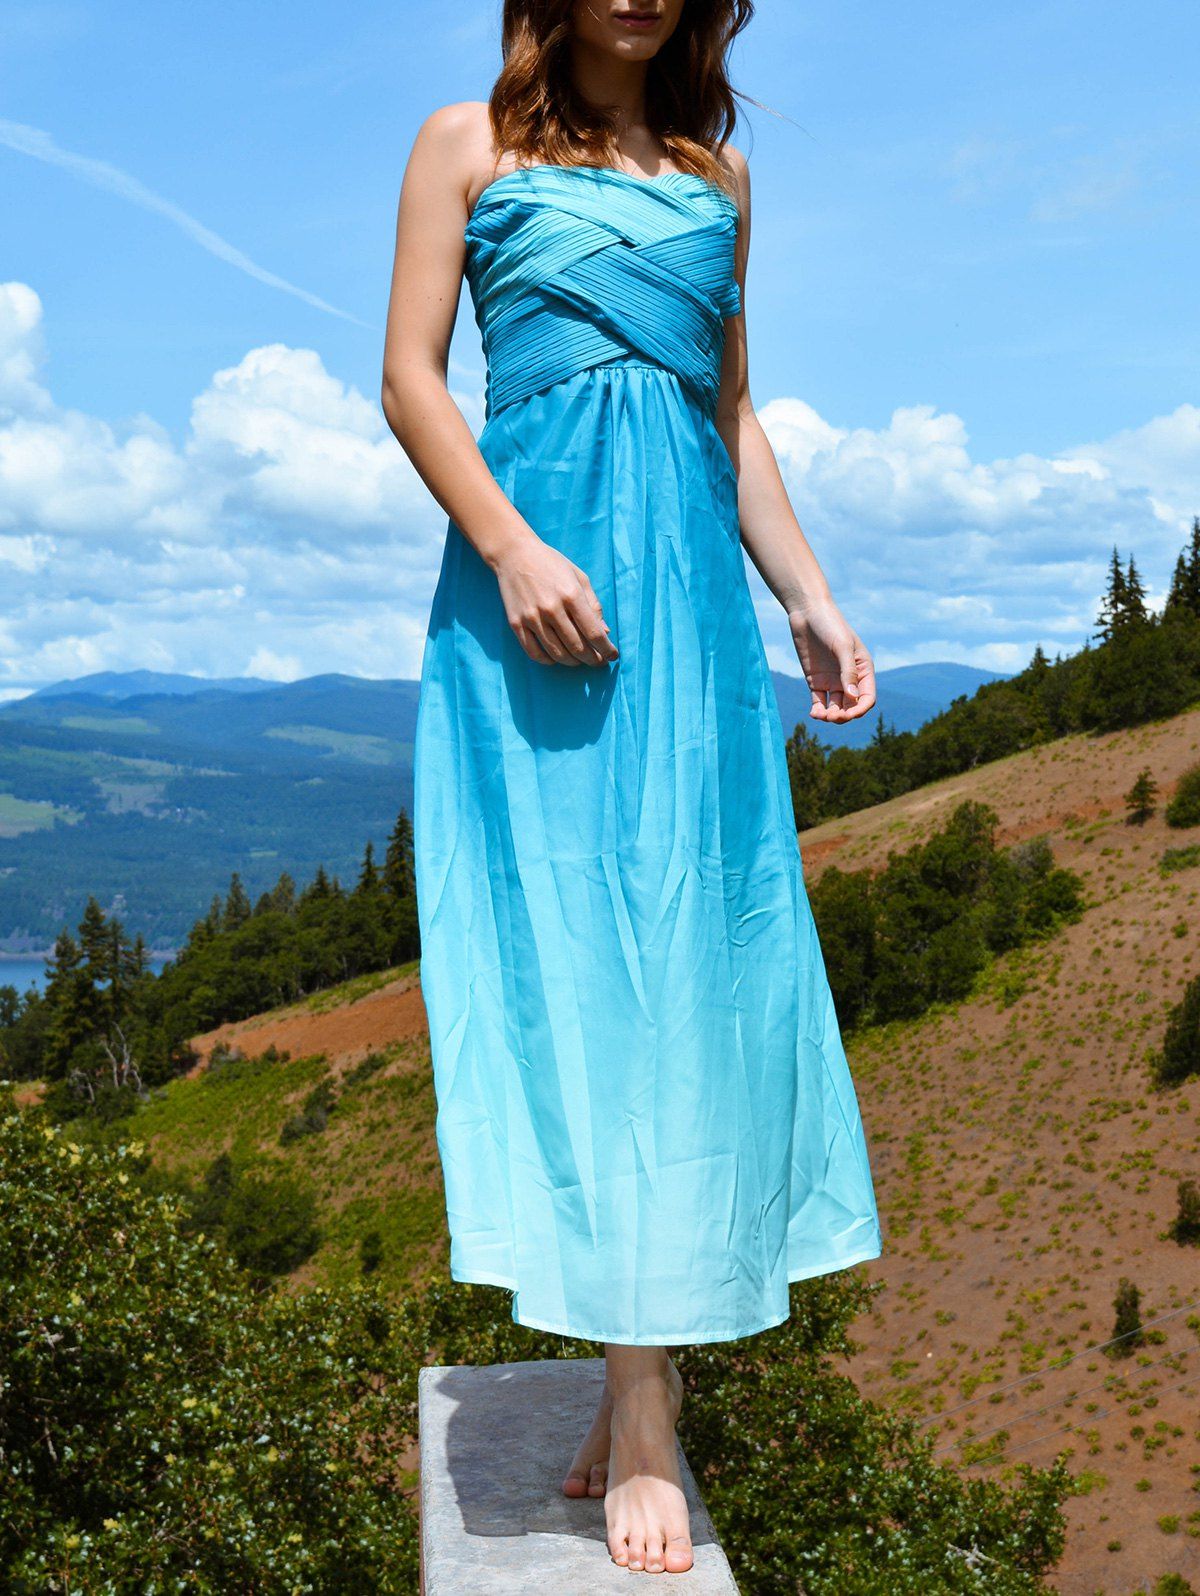 Chic Sleeveless Strapless Ombre Women's Maxi Dress - AZURE M